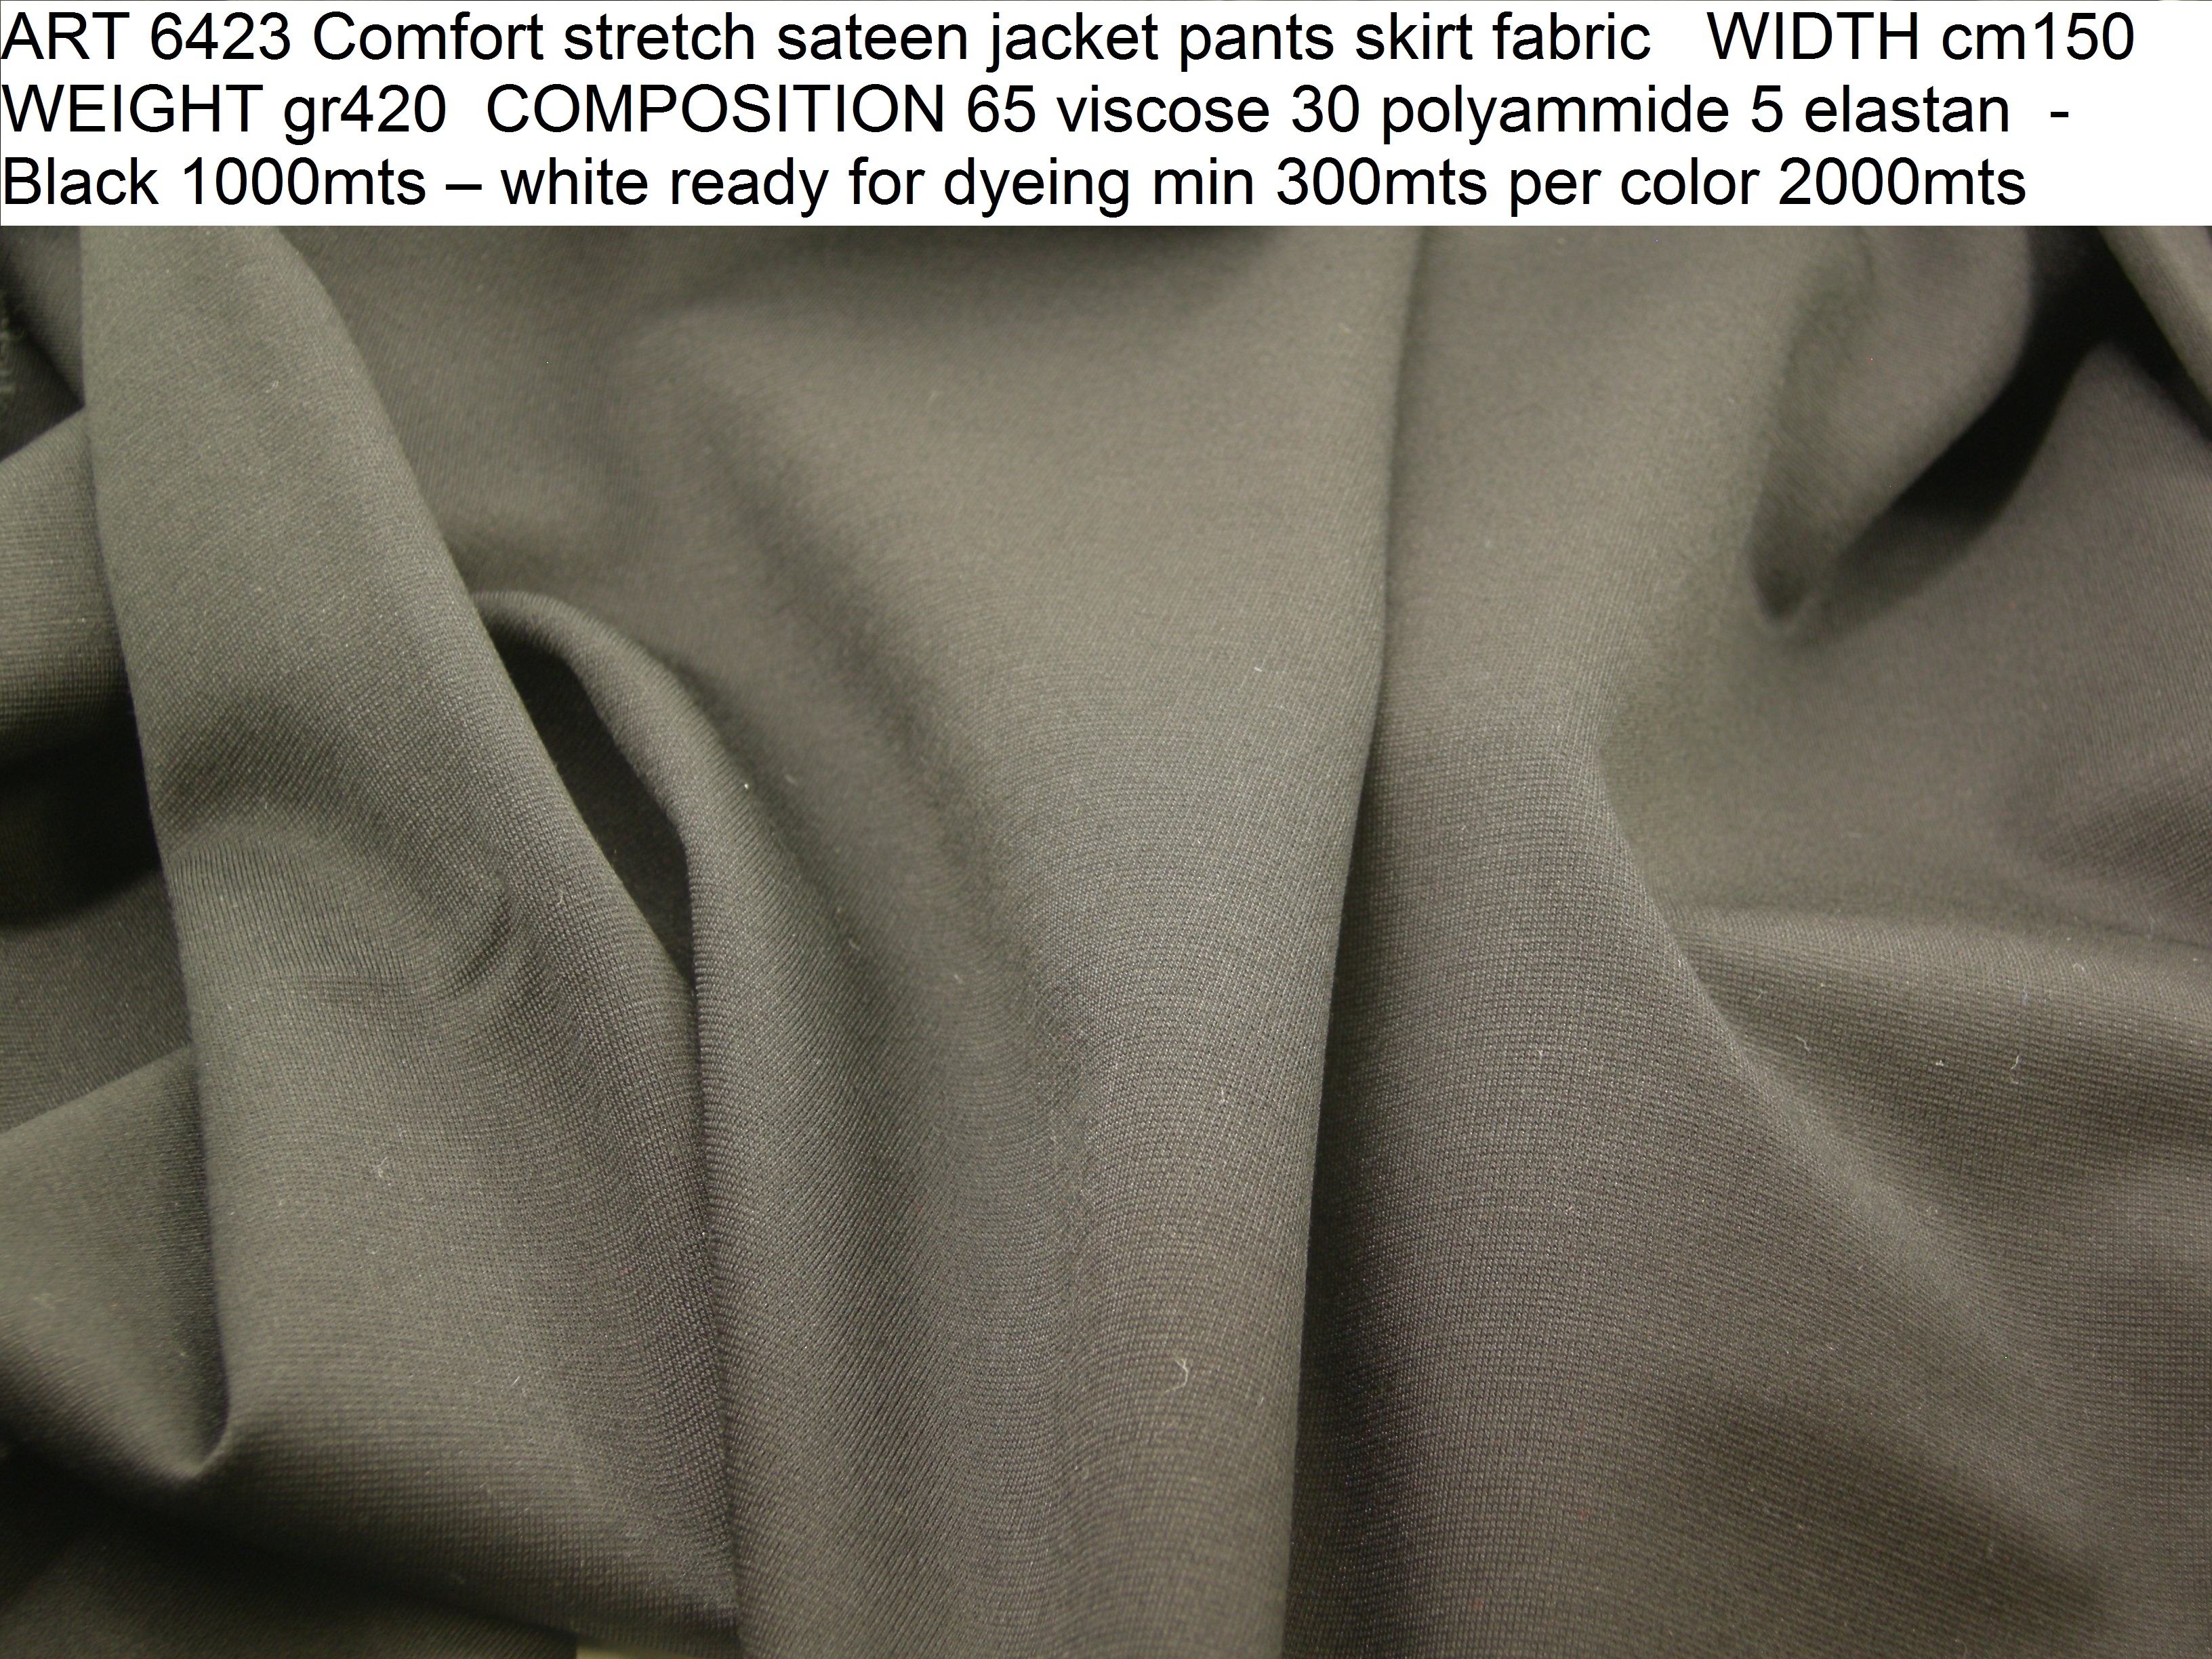 ART 6423 Comfort stretch sateen jacket pants skirt fabric WIDTH cm150 WEIGHT gr420 COMPOSITION 65 viscose 30 polyammide 5 elastan - Black 1000mts – pfd min 300mts per color 2000mts